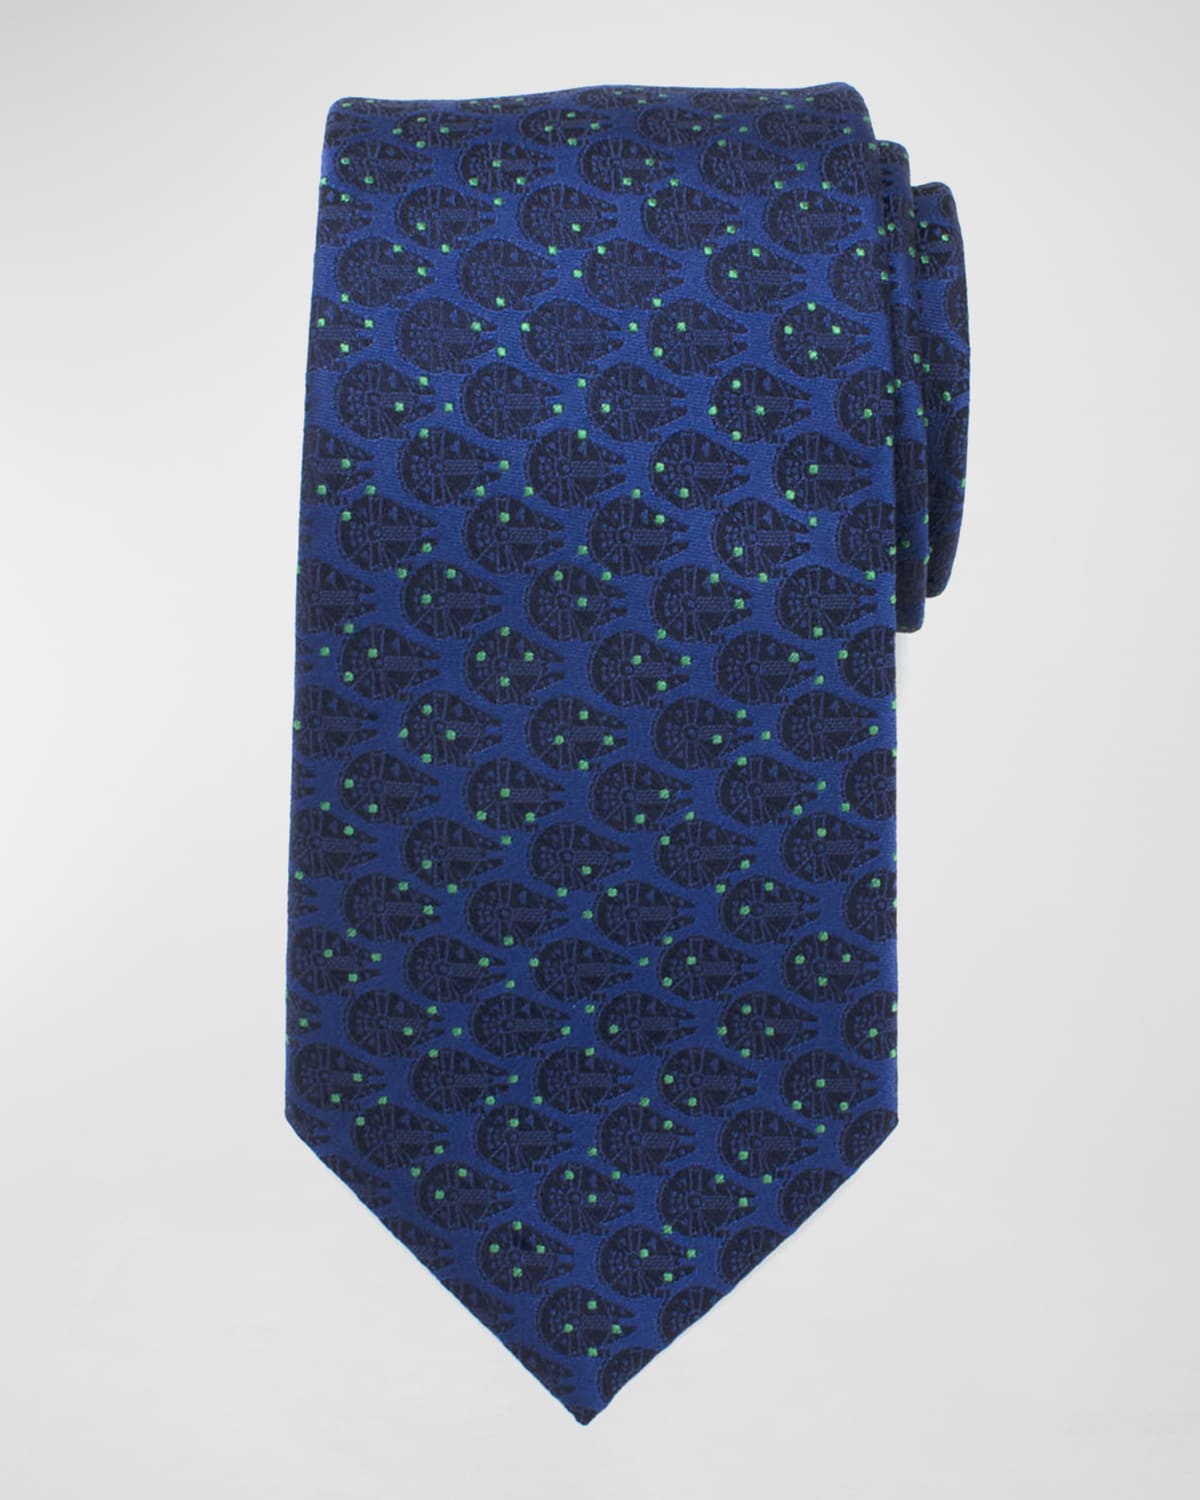 Cufflinks Inc. Millennium Falcon Dotted Tie